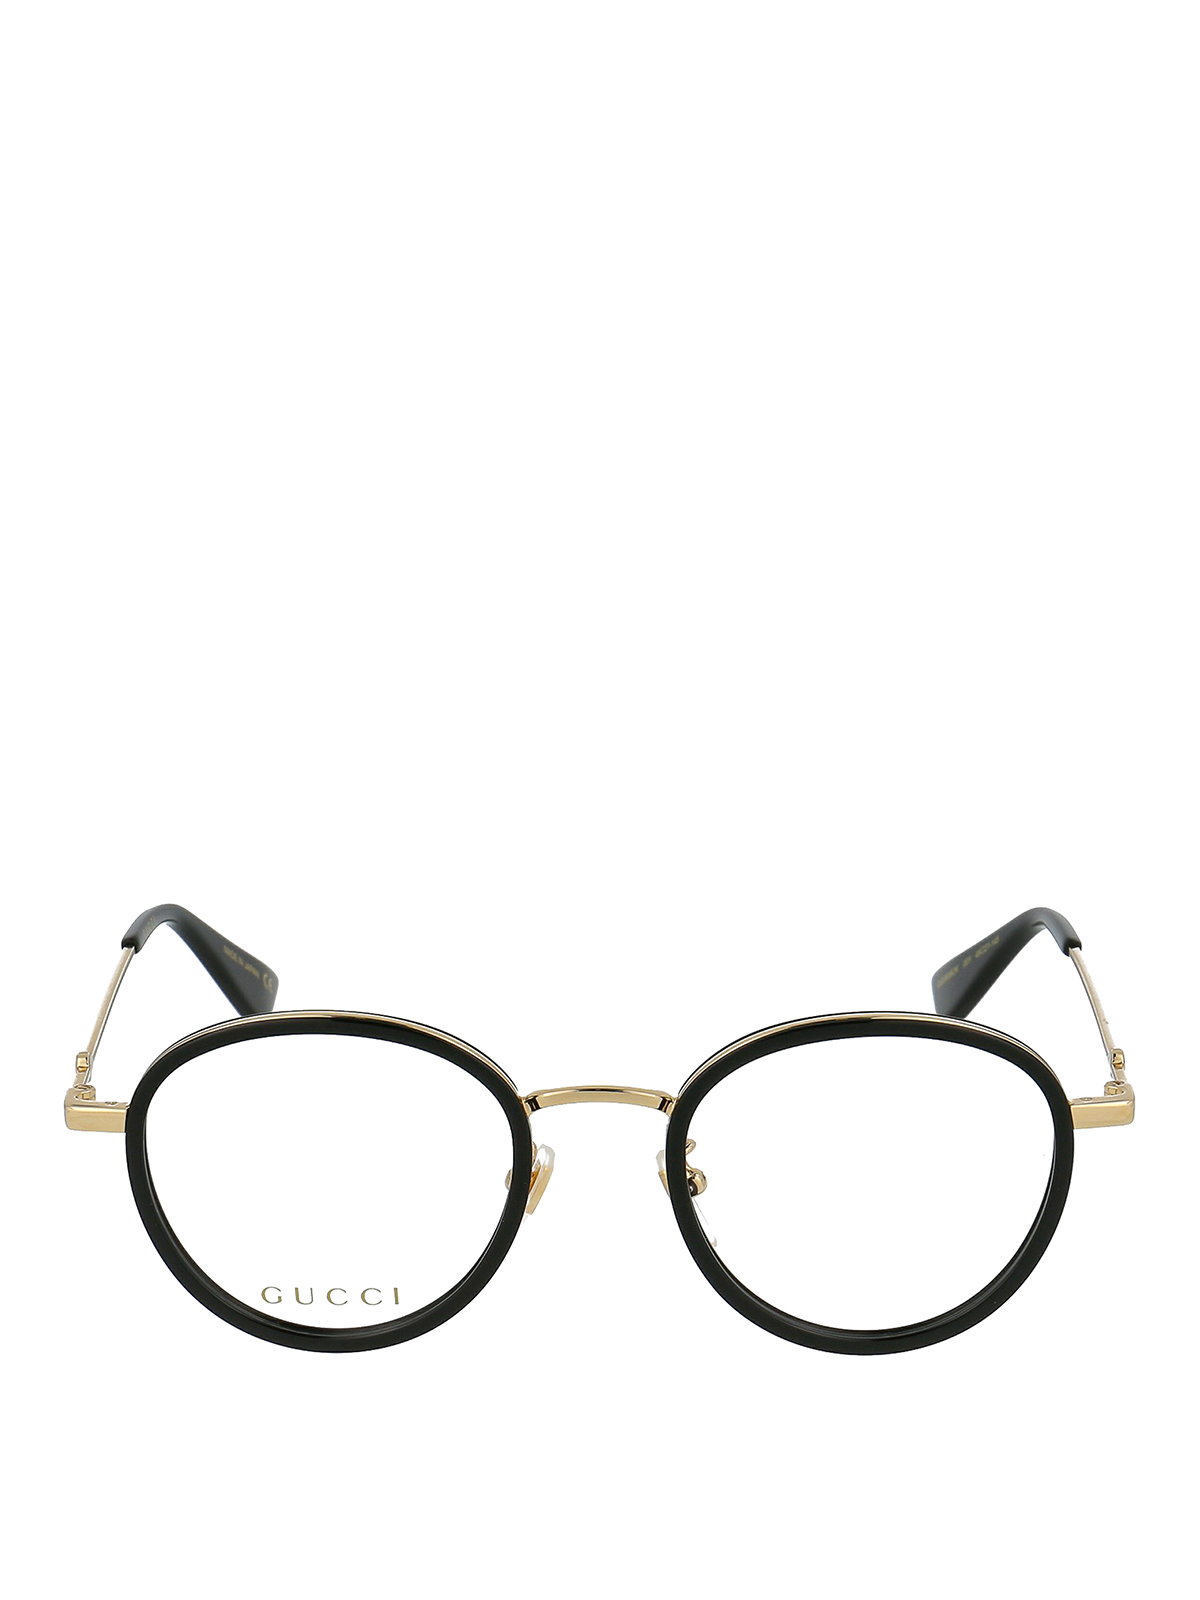 gucci black and gold eyeglasses